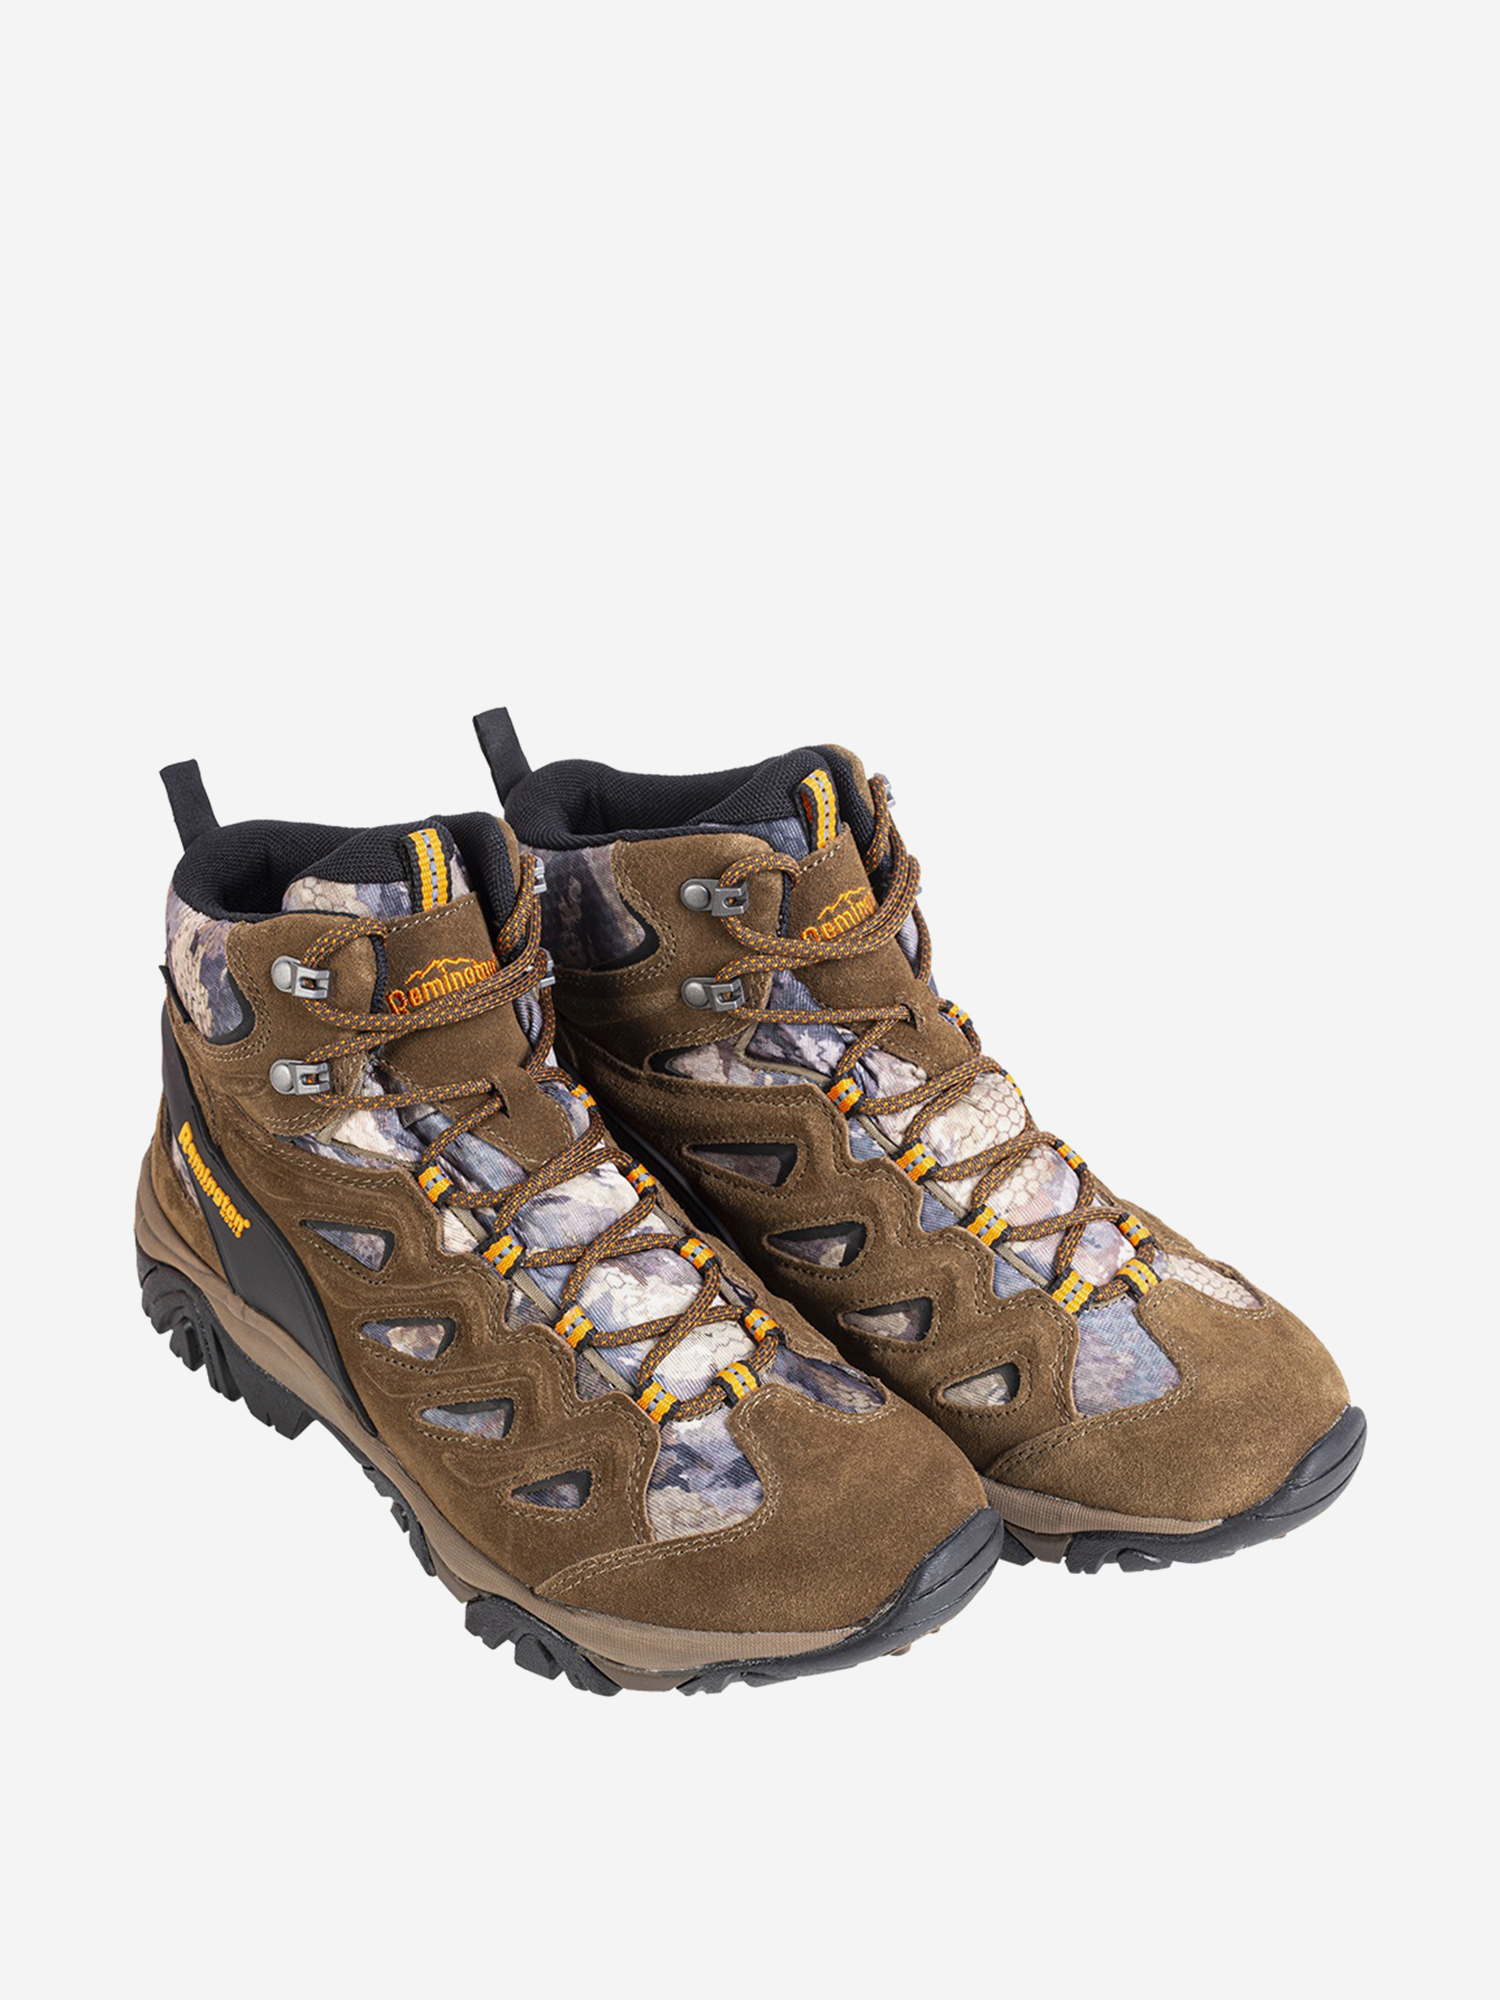 Ботинки Remington outdoor trekking brown, Коричневый